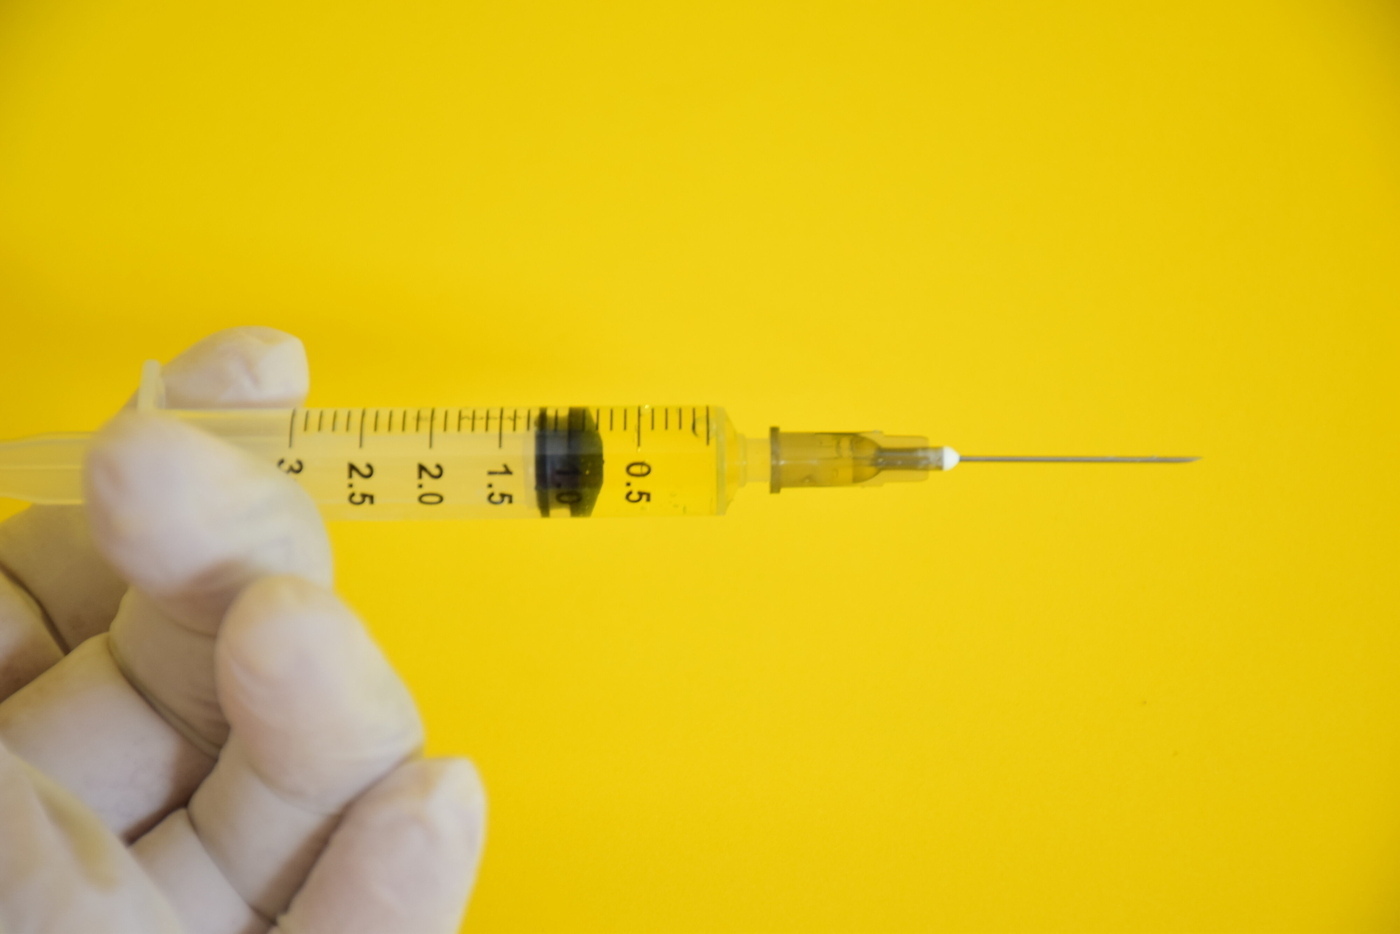 Anvisa inicia análise parcial da vacina de Oxford contra Covid-19